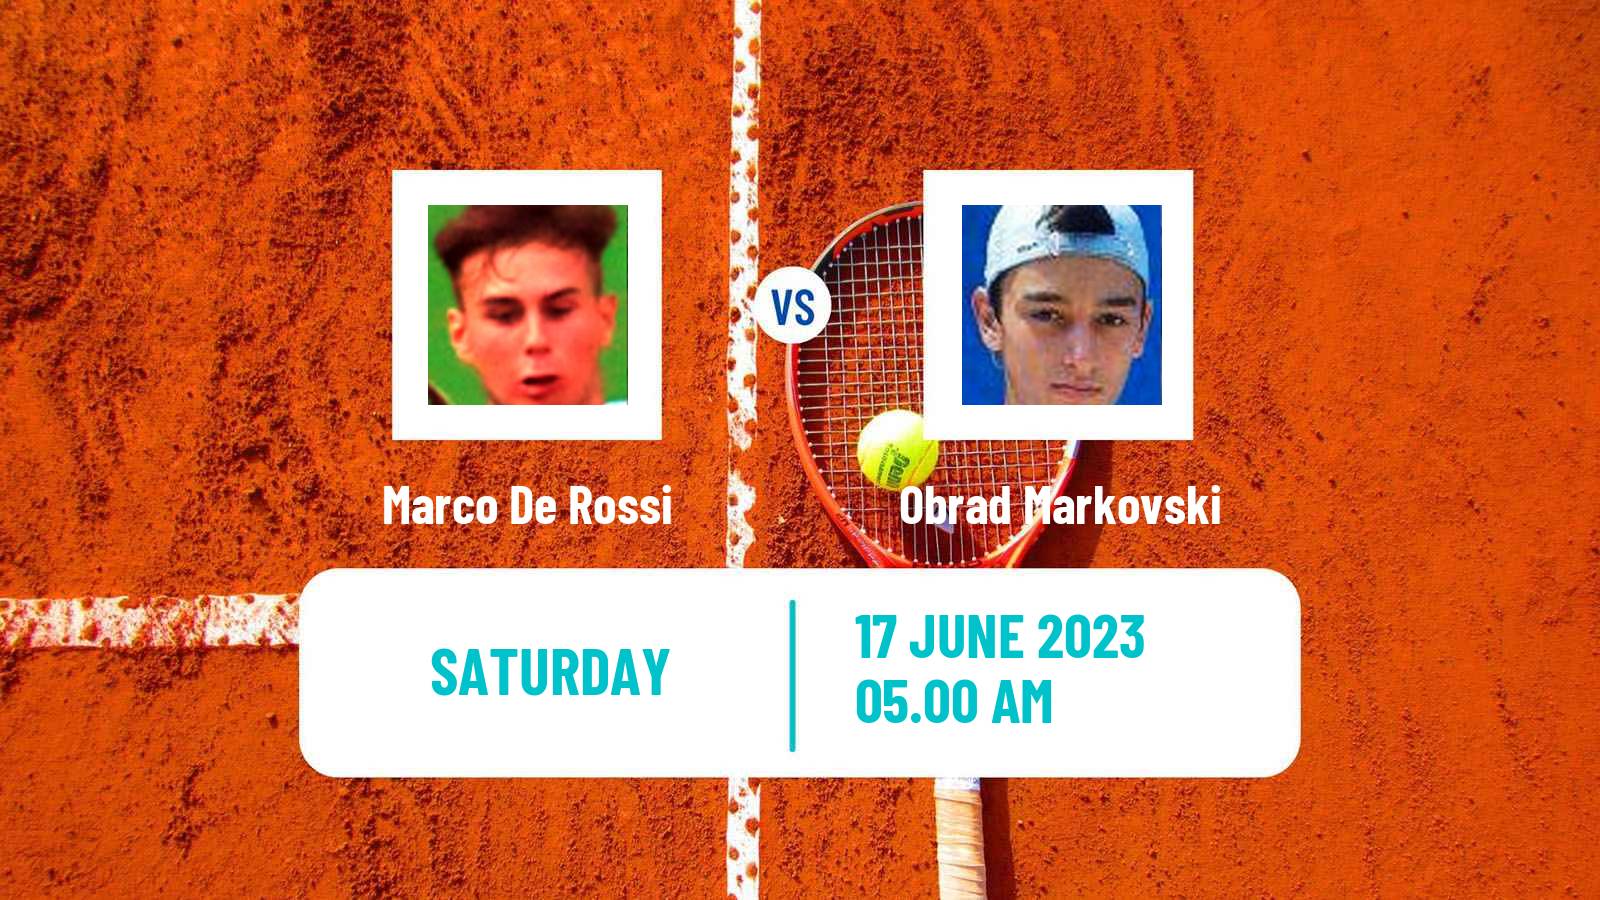 Tennis Davis Cup Group III Marco De Rossi - Obrad Markovski